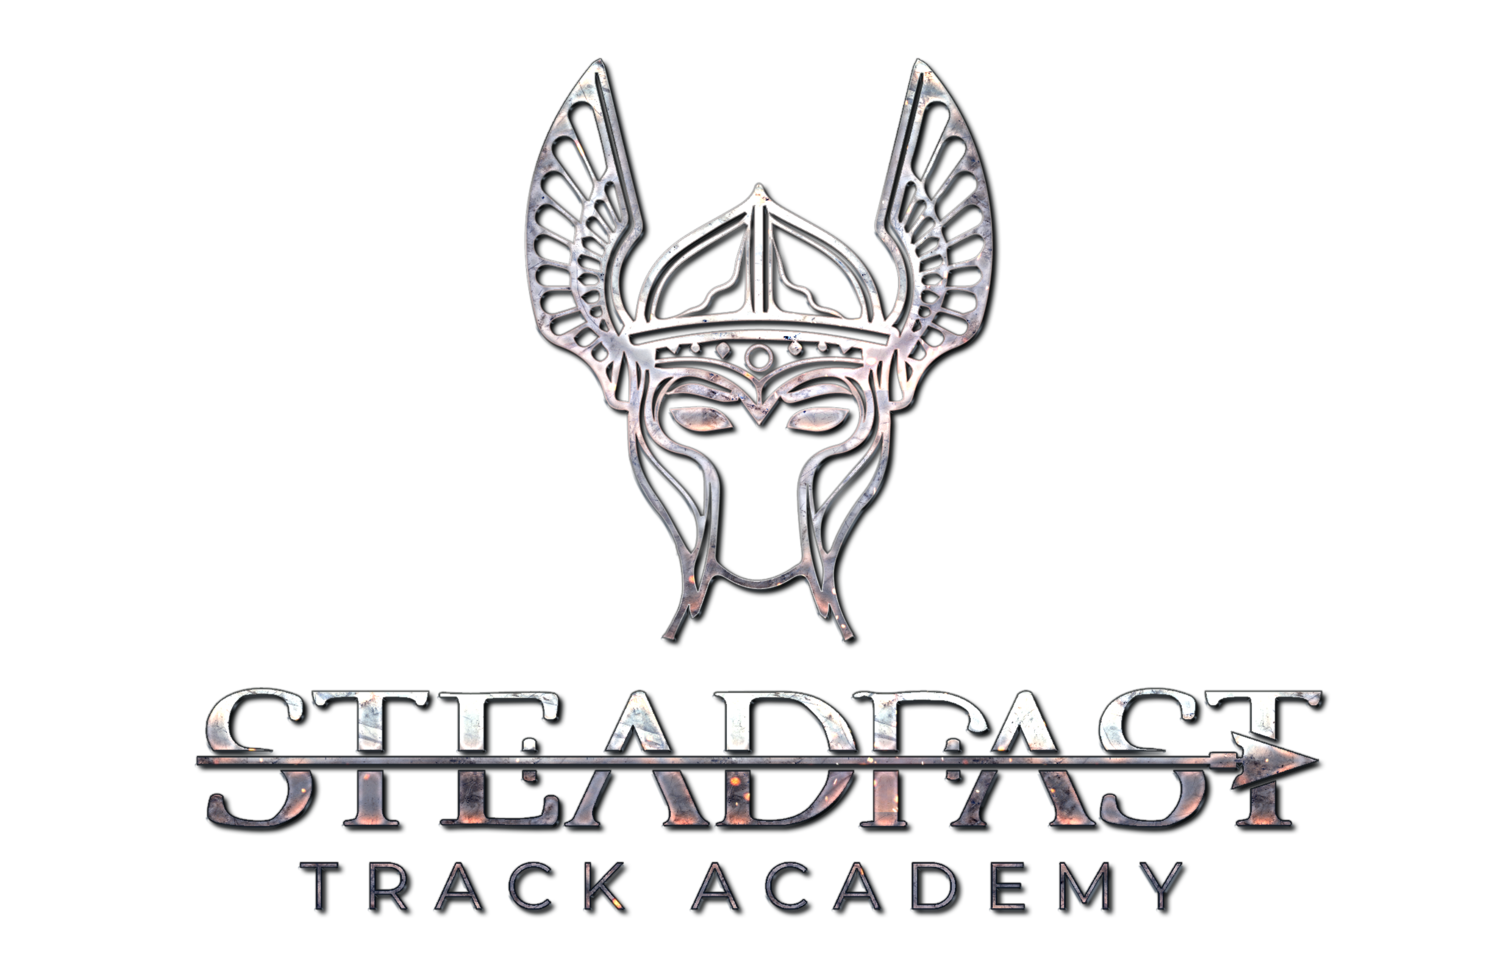 Steadfast Track Academy